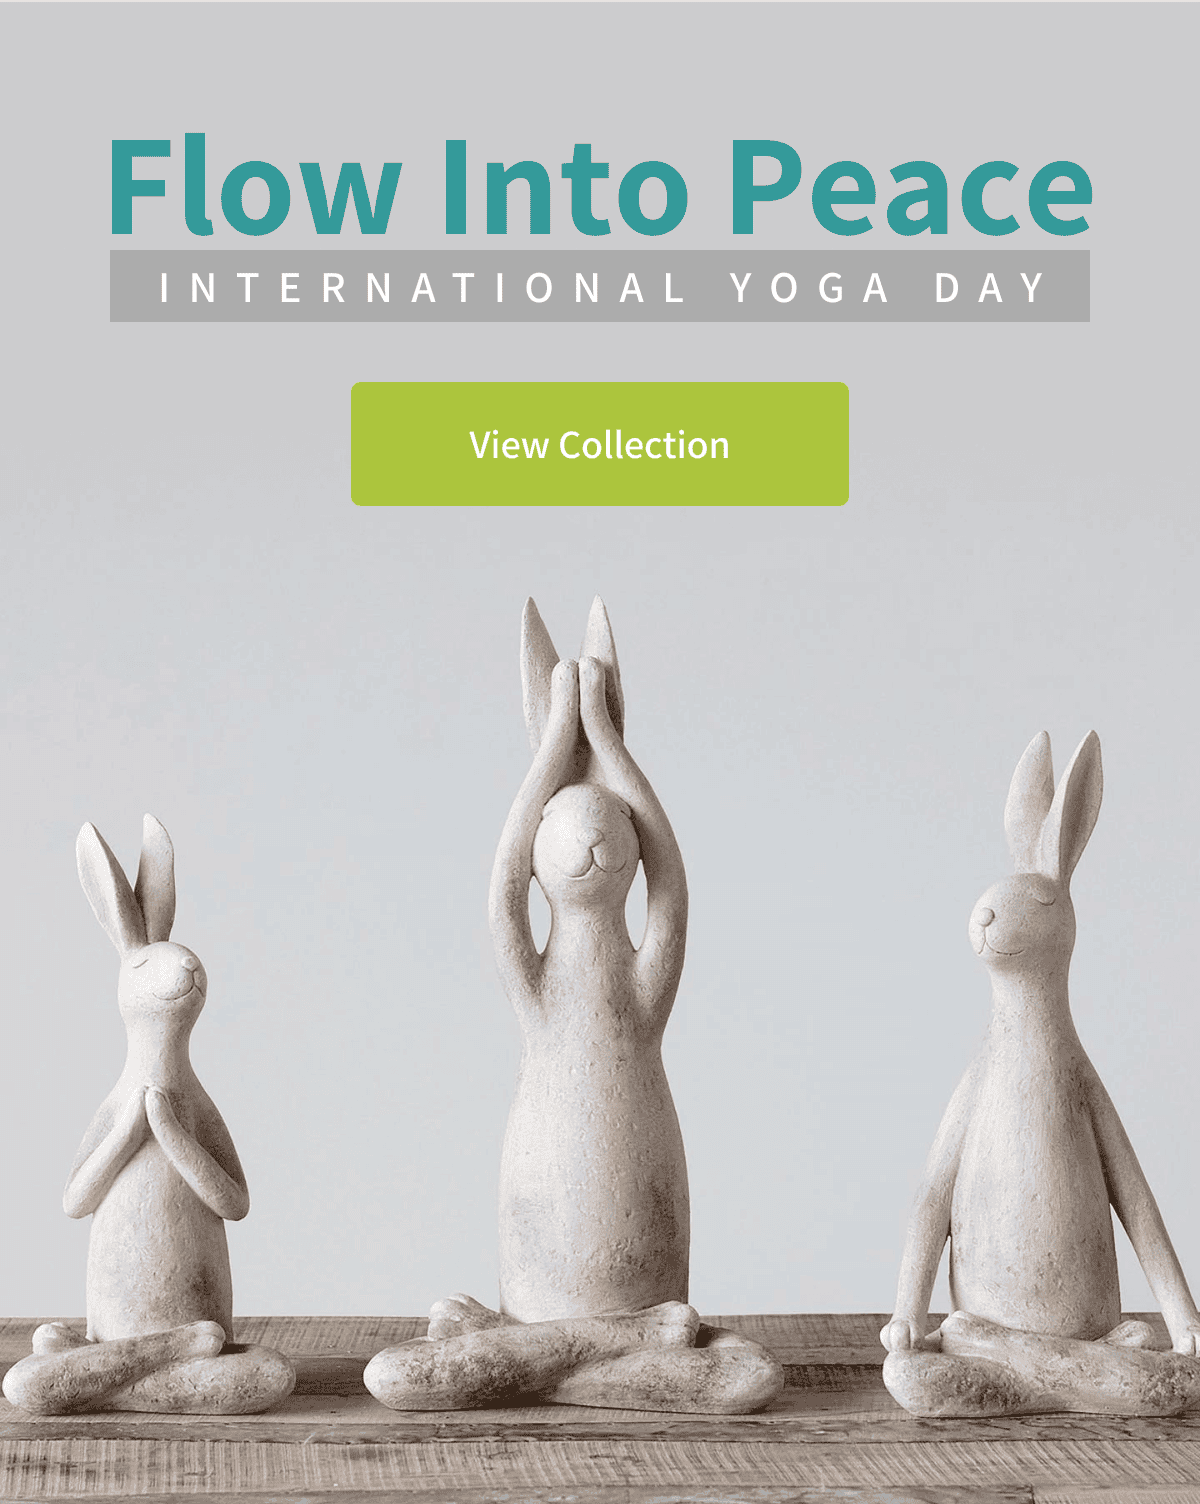 Flow into Peace: International Yoga Day